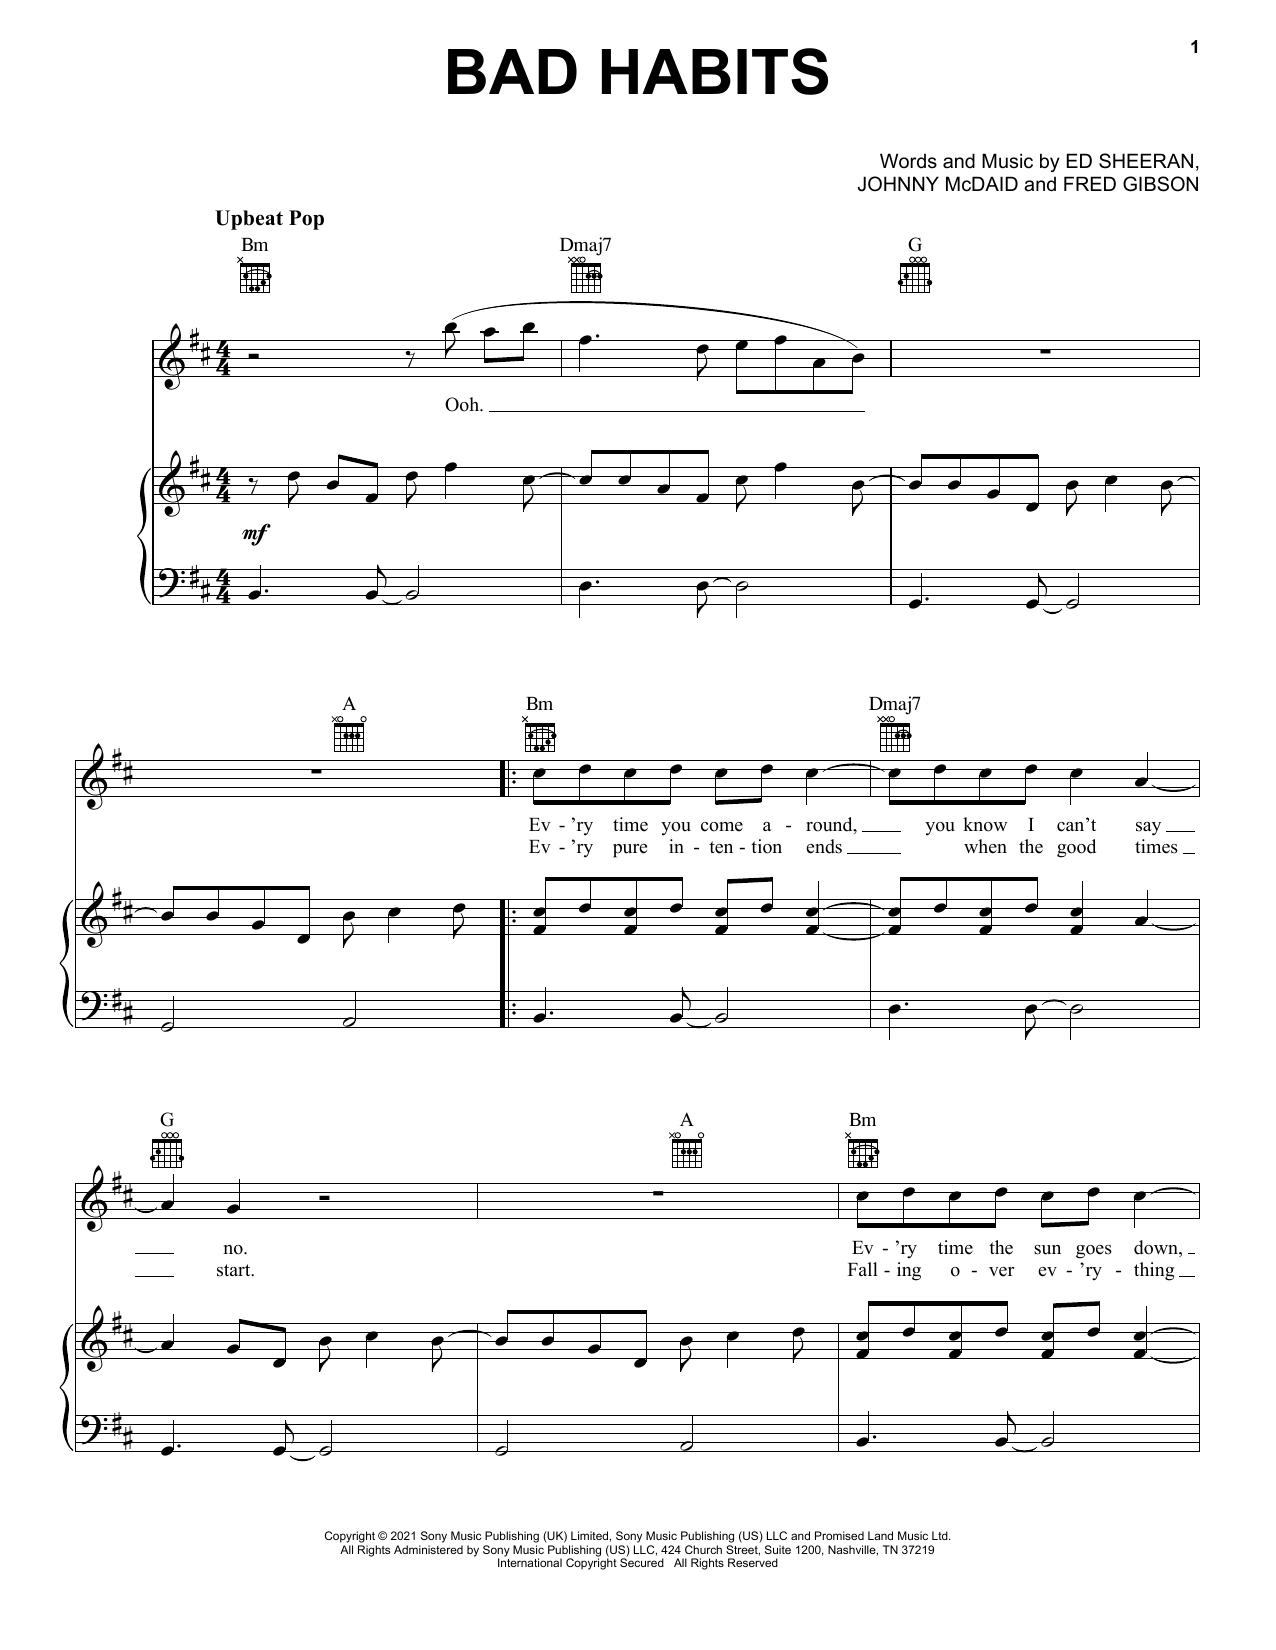 Ed Sheeran Bad Habits Sheet Music Notes & Chords for Instrumental Solo – Treble Clef Low Range - Download or Print PDF